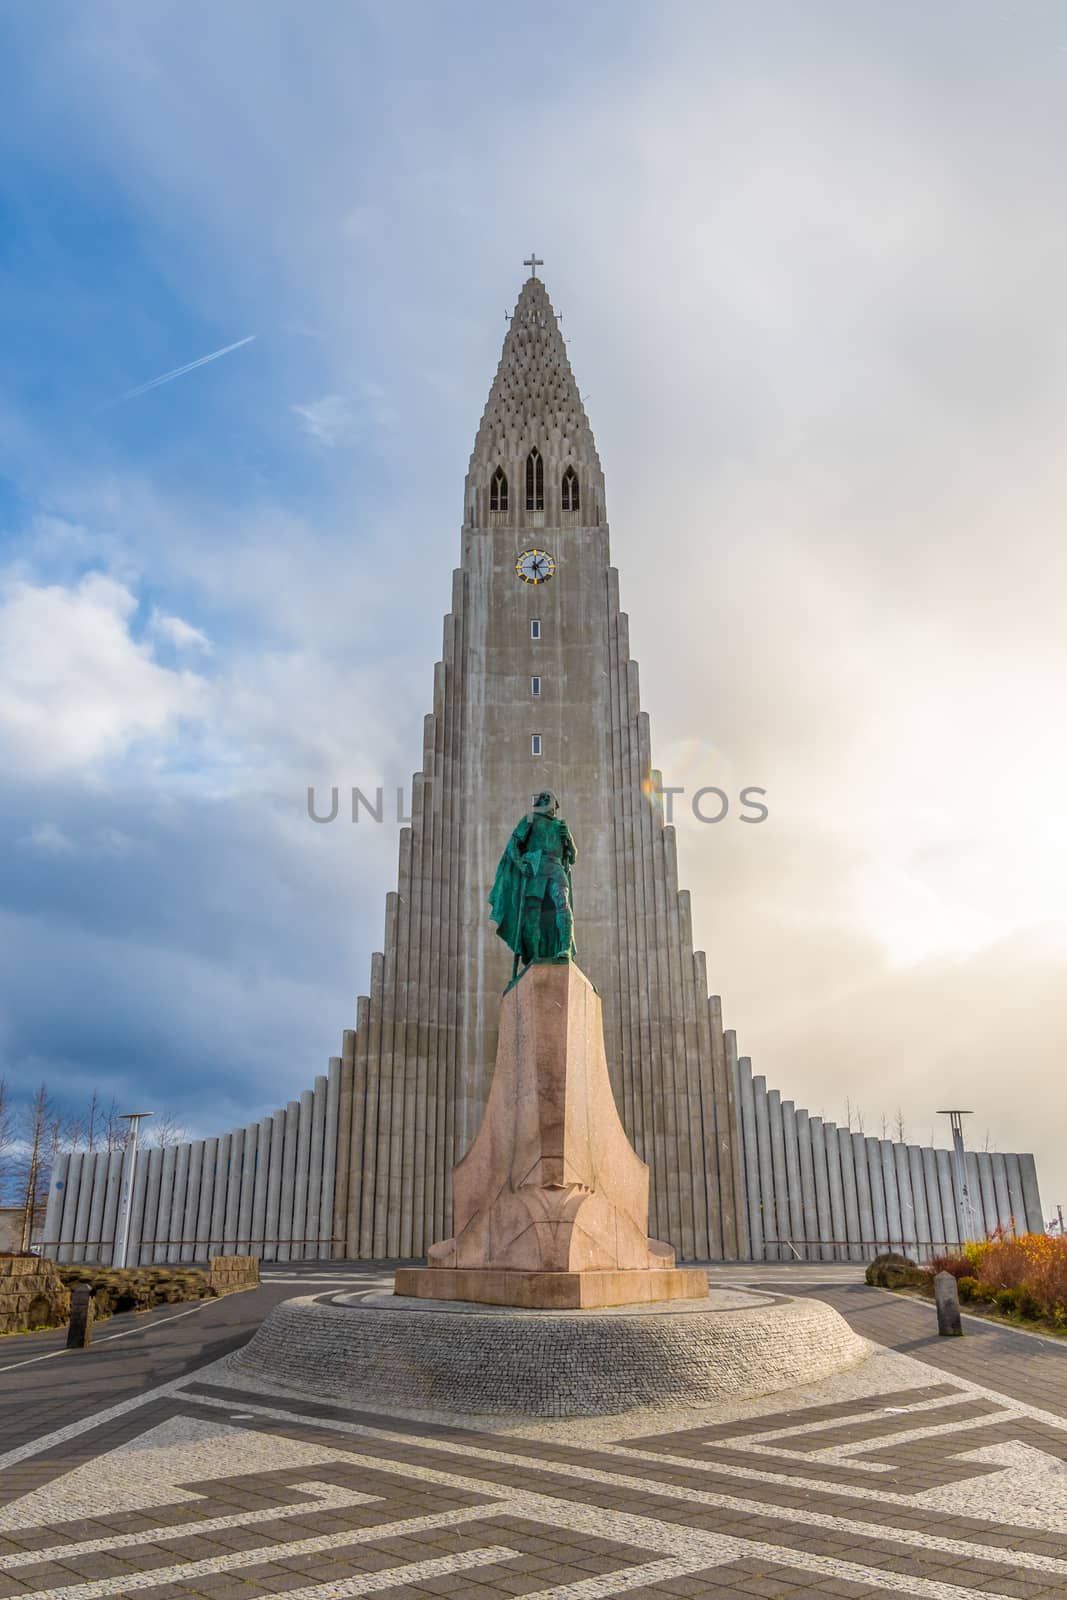 Reykjavik in Iceland Hilgrimskirkja Hilgims church during beautiful sunny day by MXW_Stock